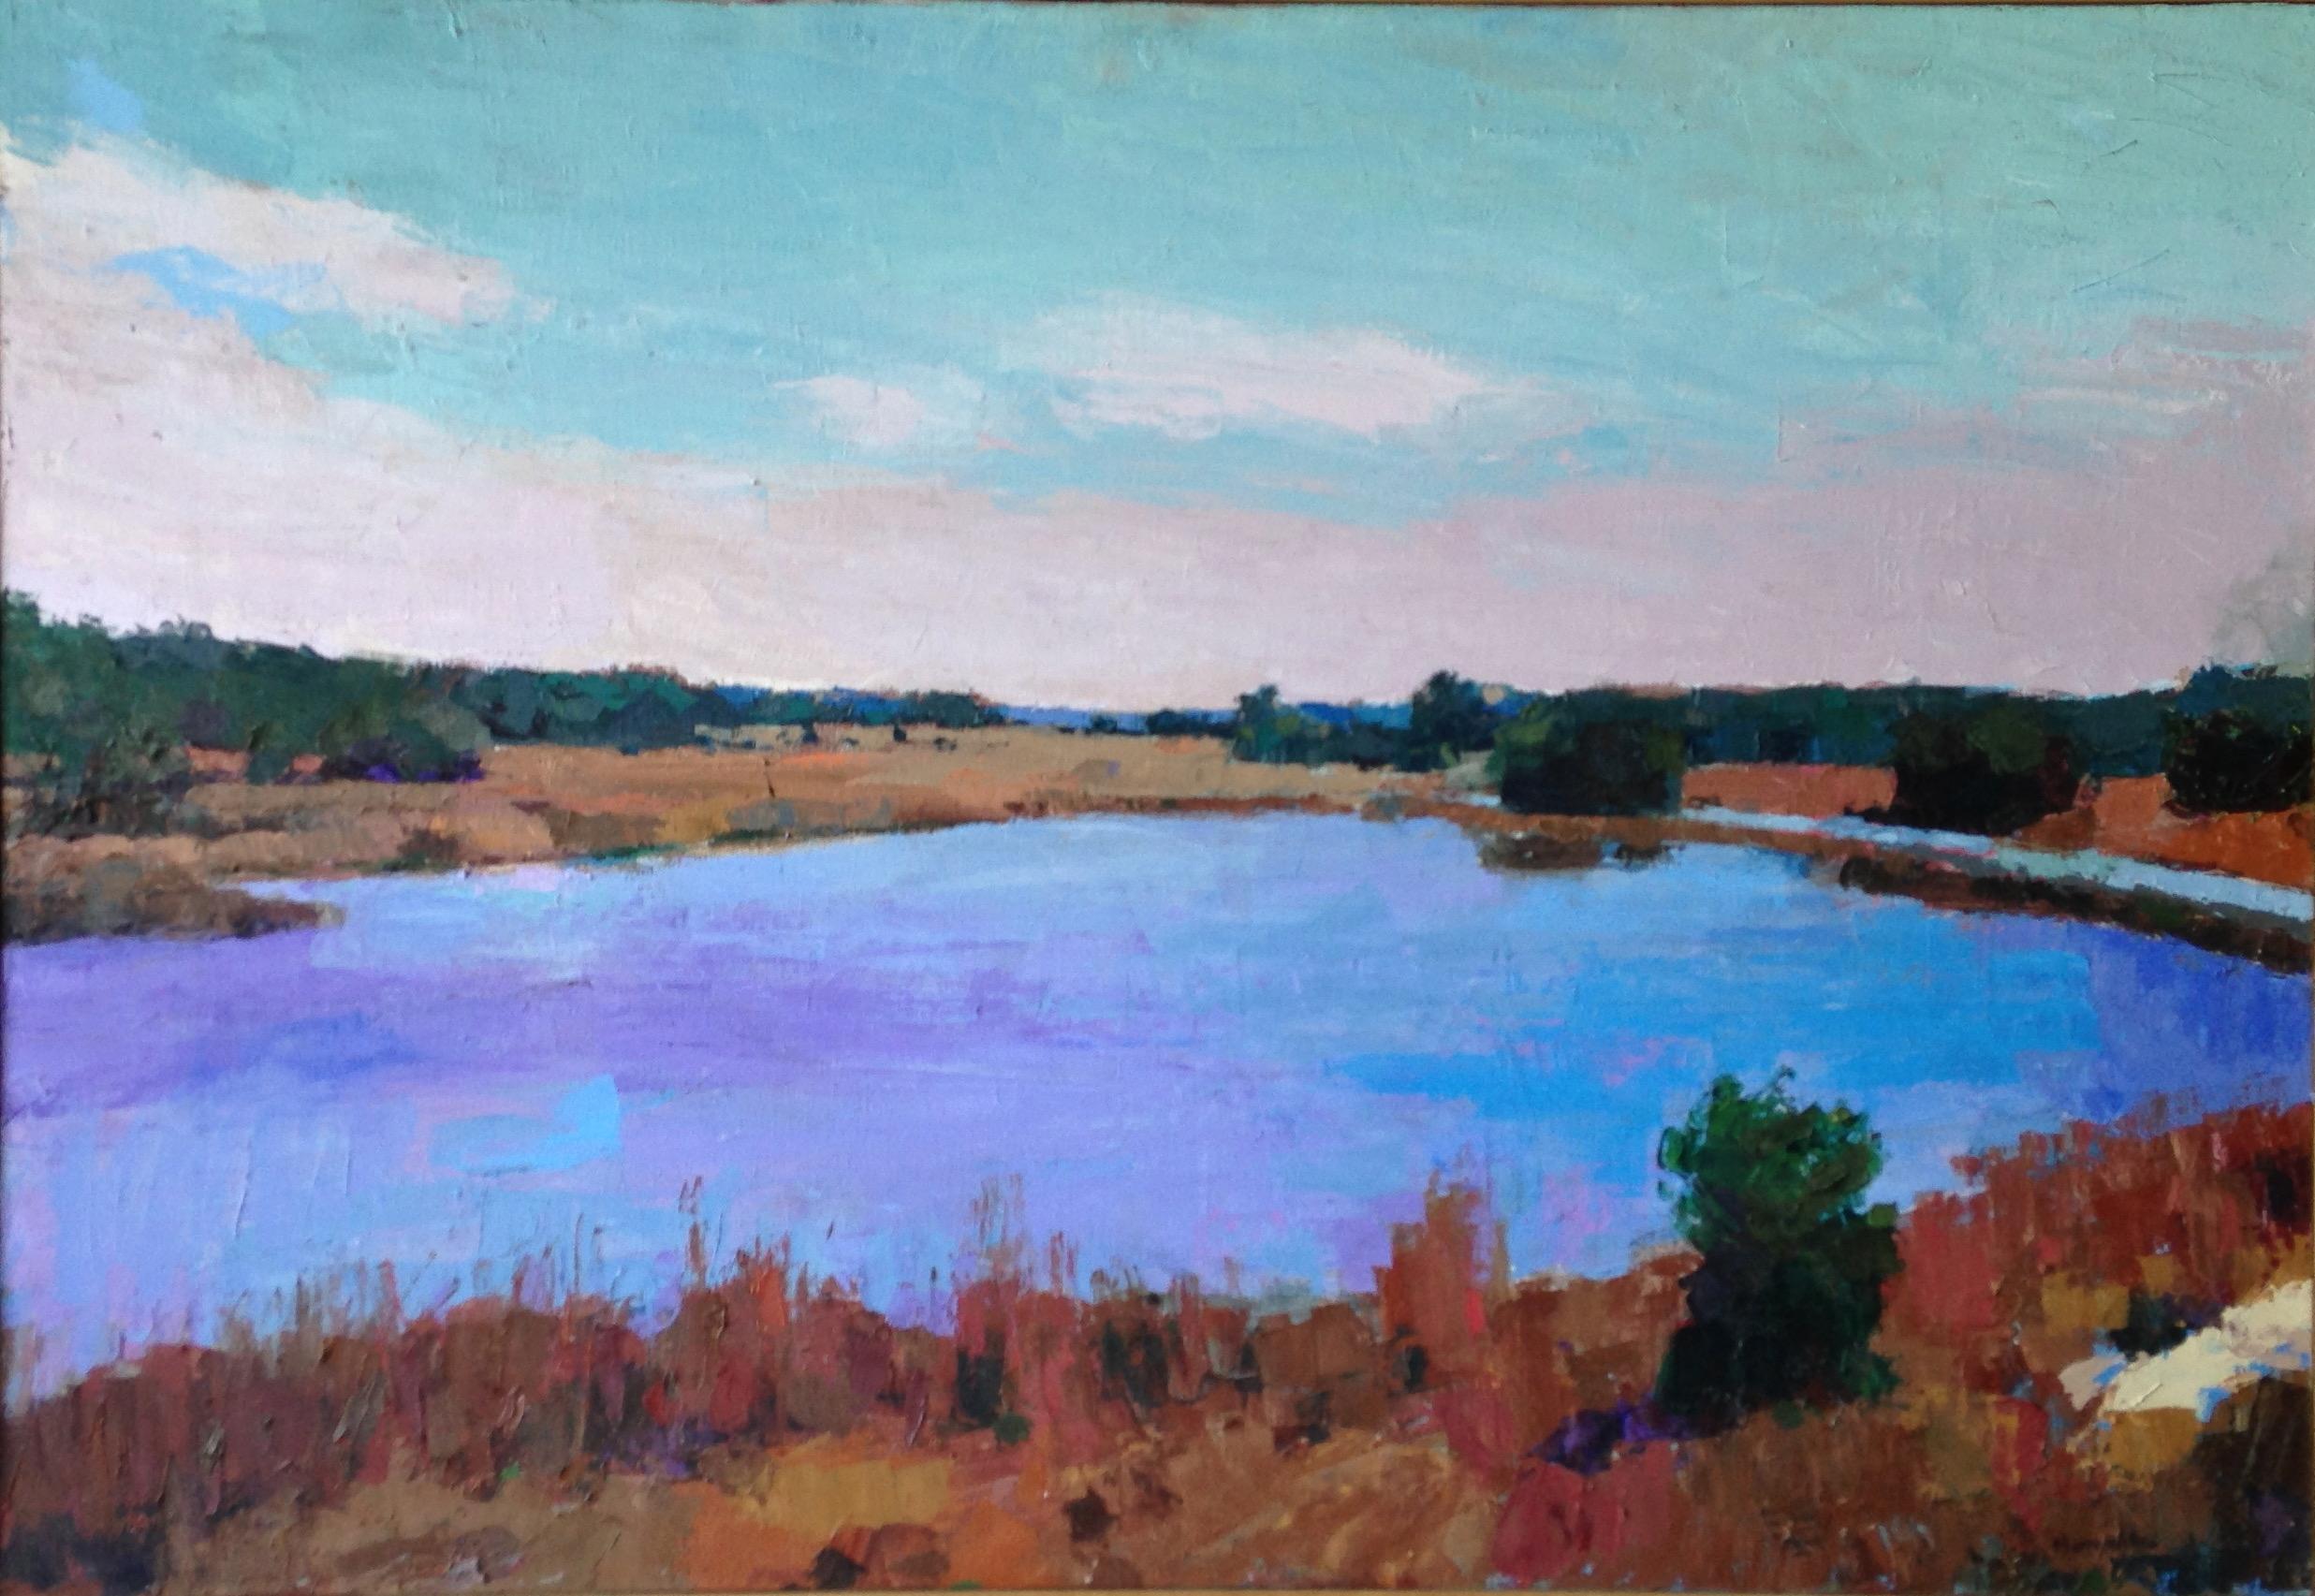 Larry Horowitz Landscape Painting - "Wildlife Refuge" landscape oil painting of a blue lake with marshland and sky